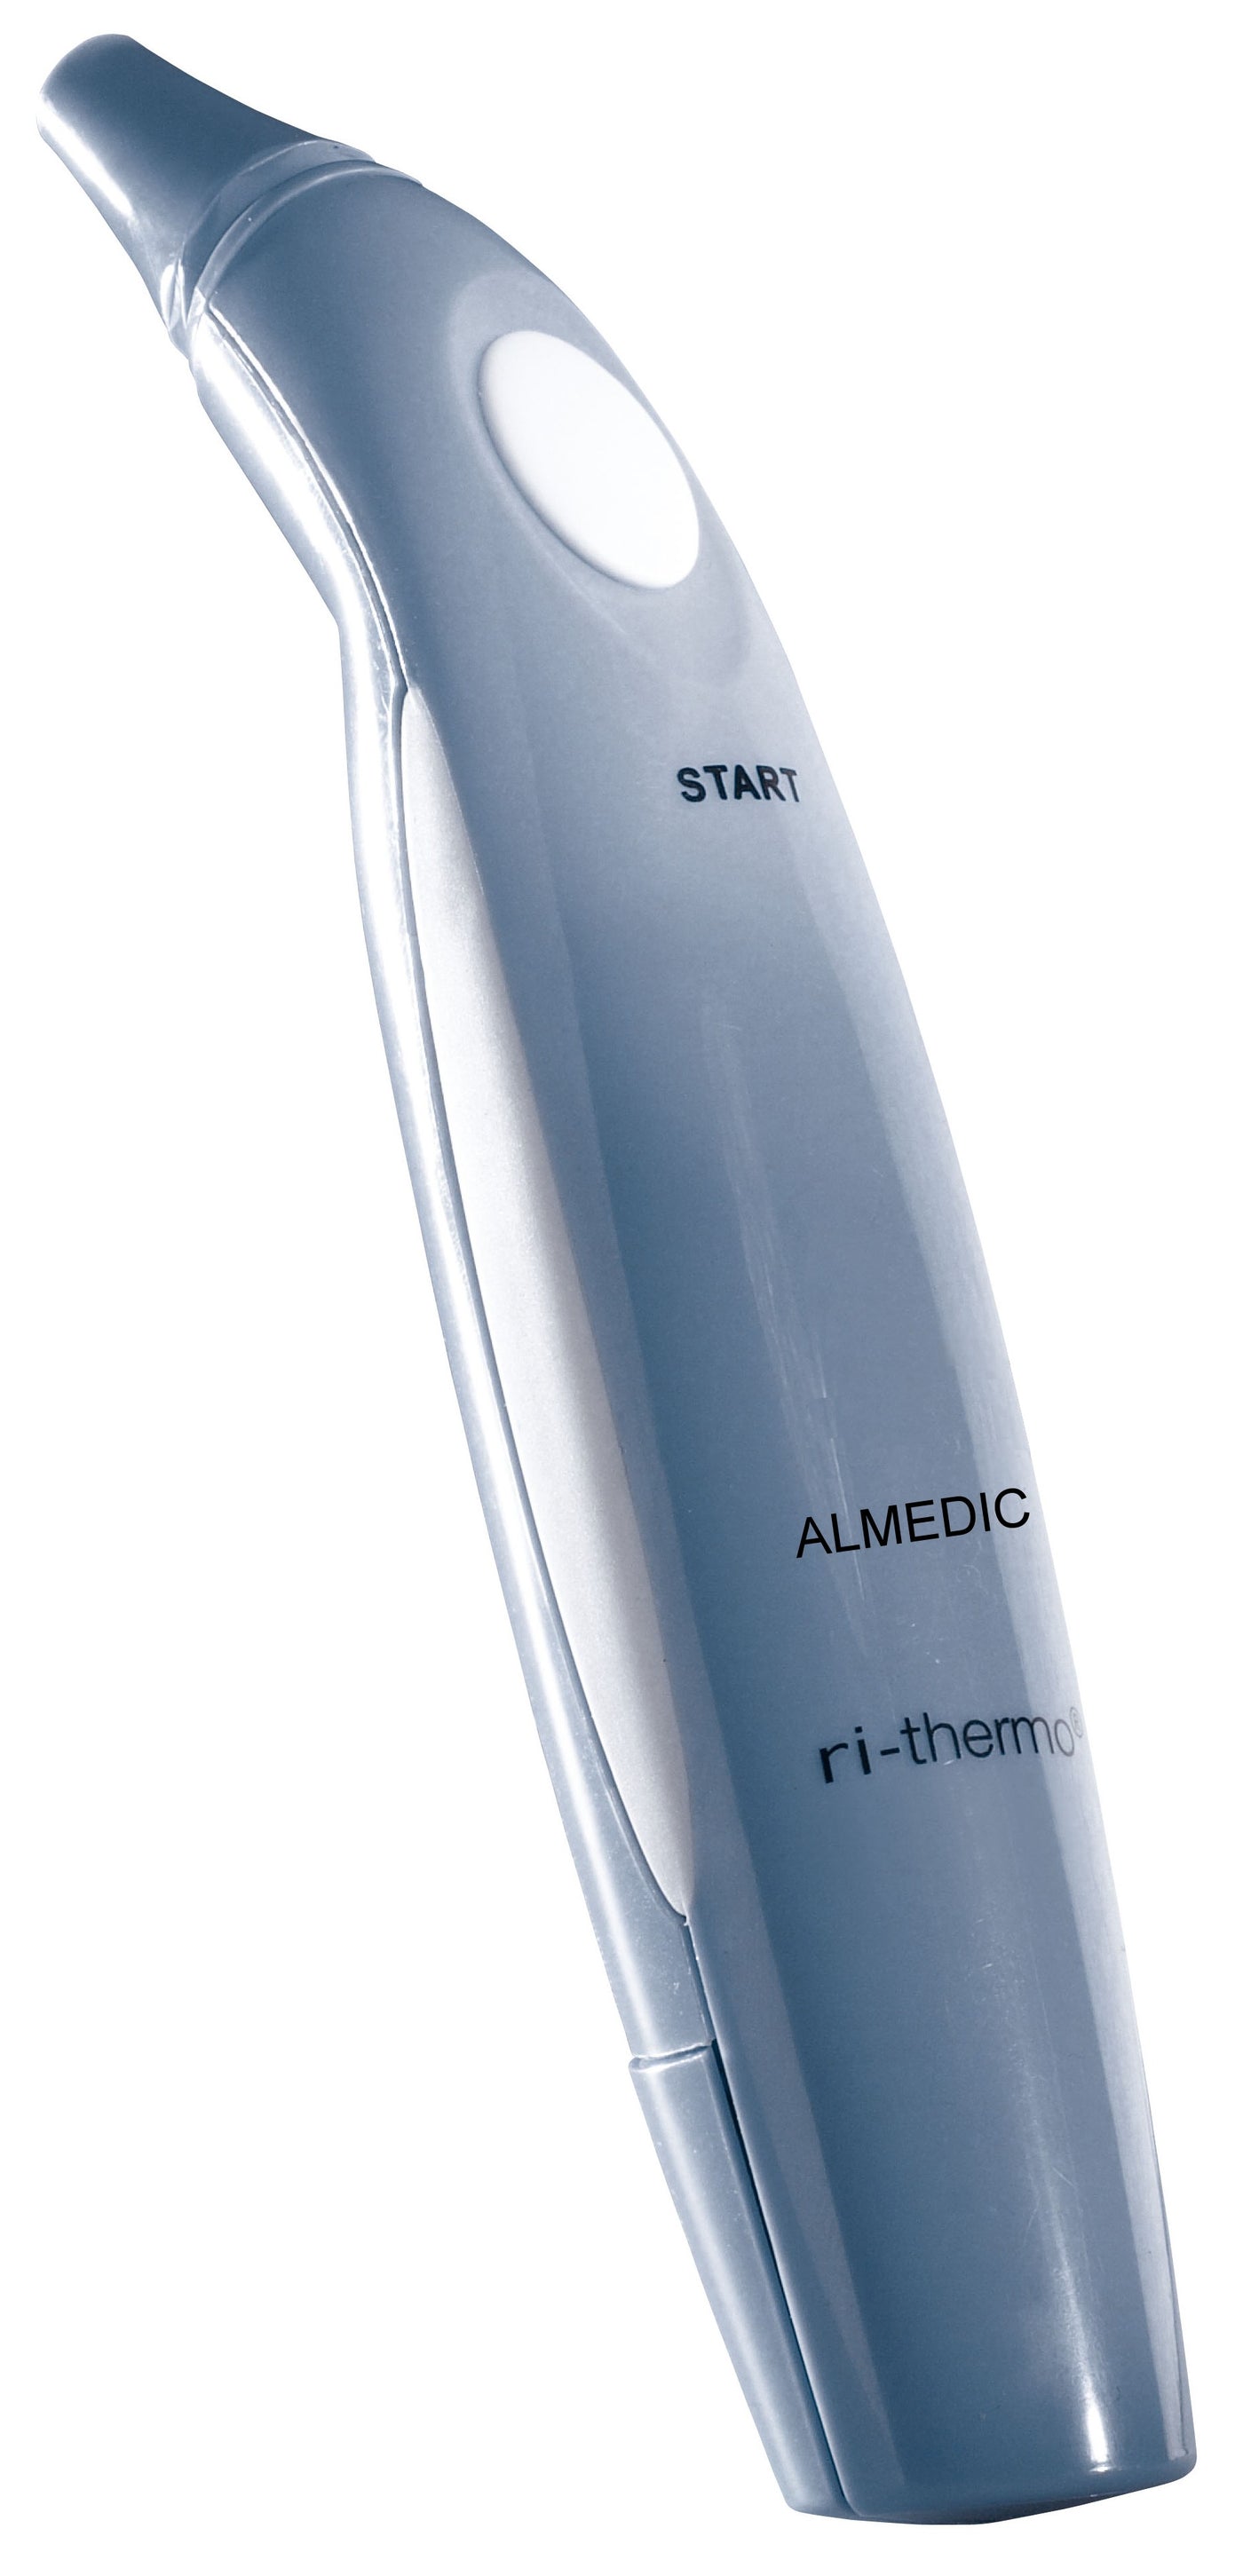 Almedic Ear Thermometer - Avida Healthwear Inc.